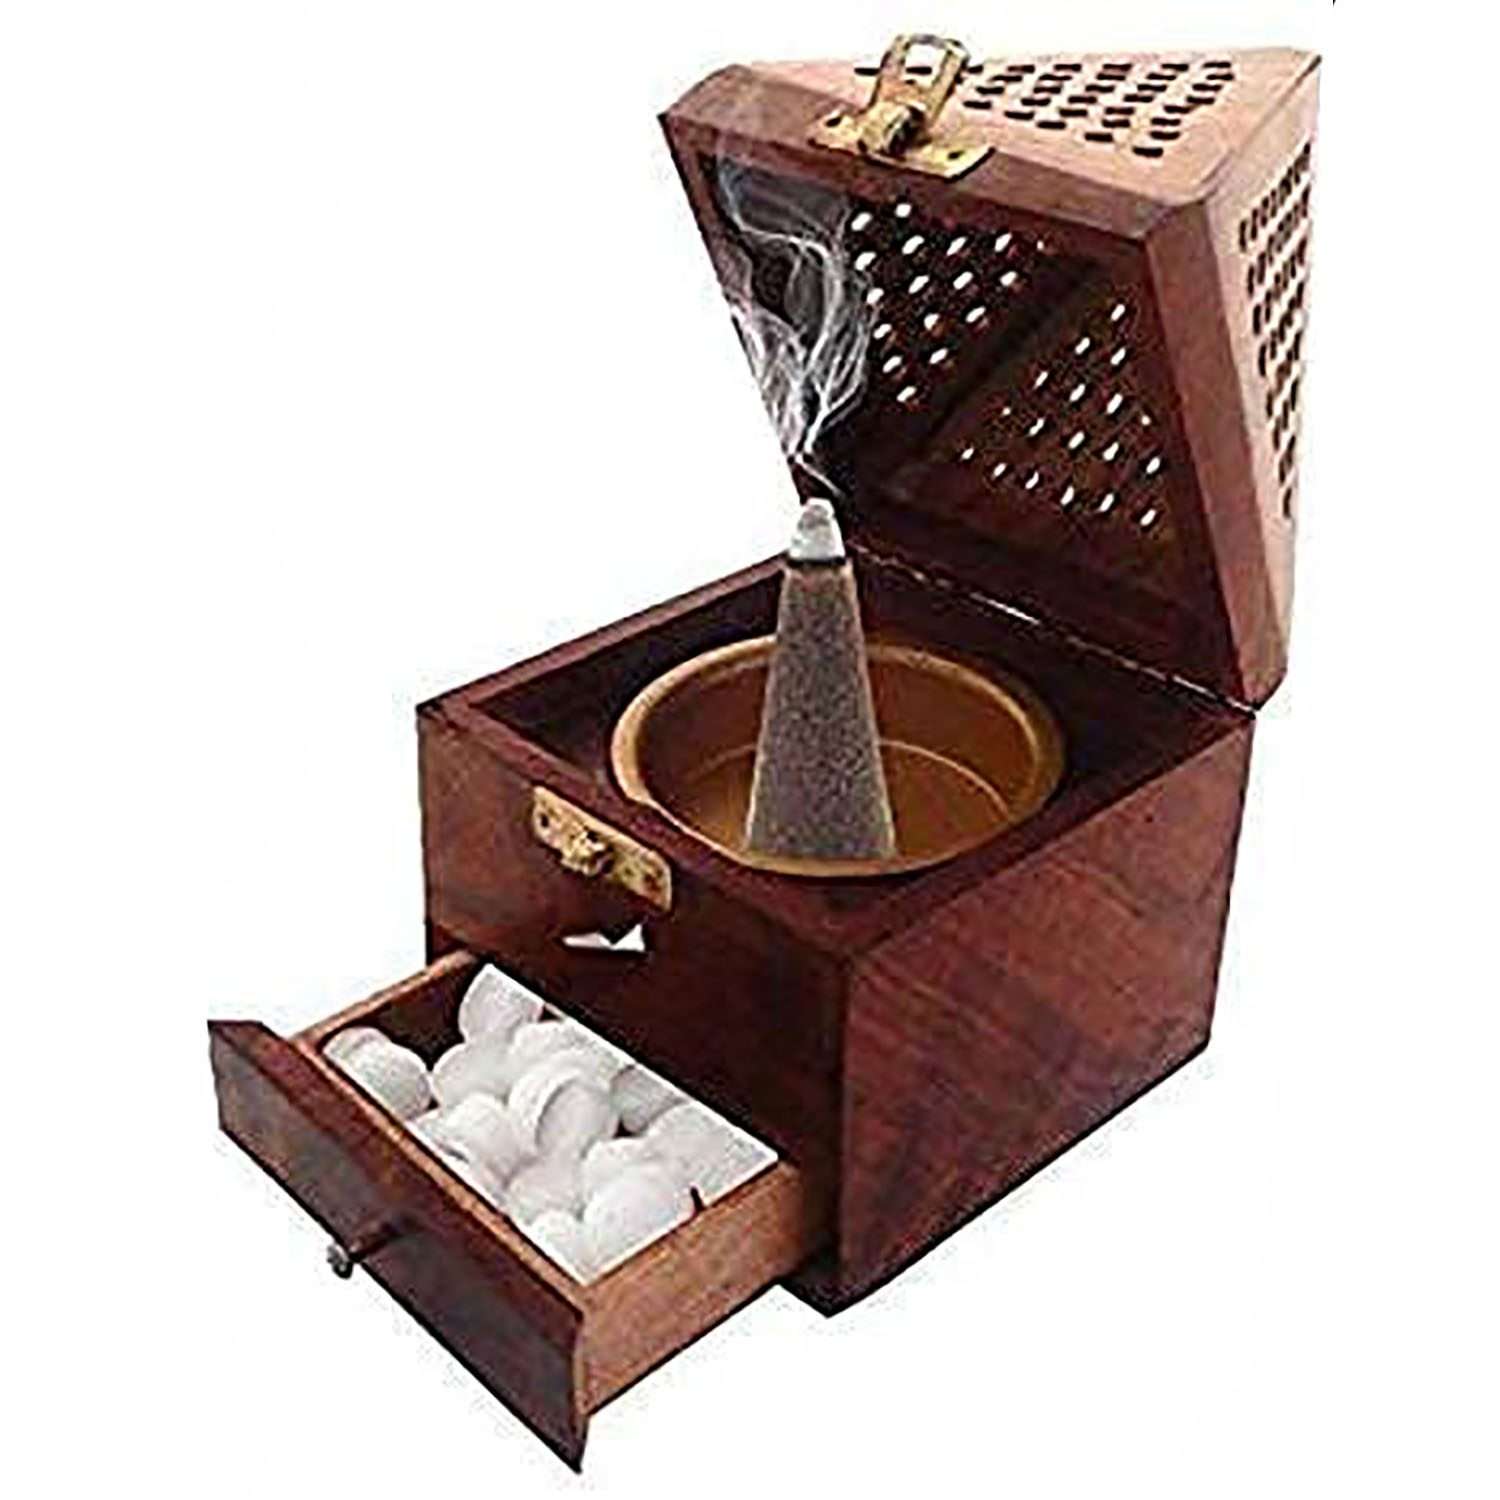 Wooden Pyramid Shape Incense Sticks Holder | Wooden Incense Box Ash Catcher | Home Fragrance Stand Holder | Agarbatti & Dhoop Dan Brown